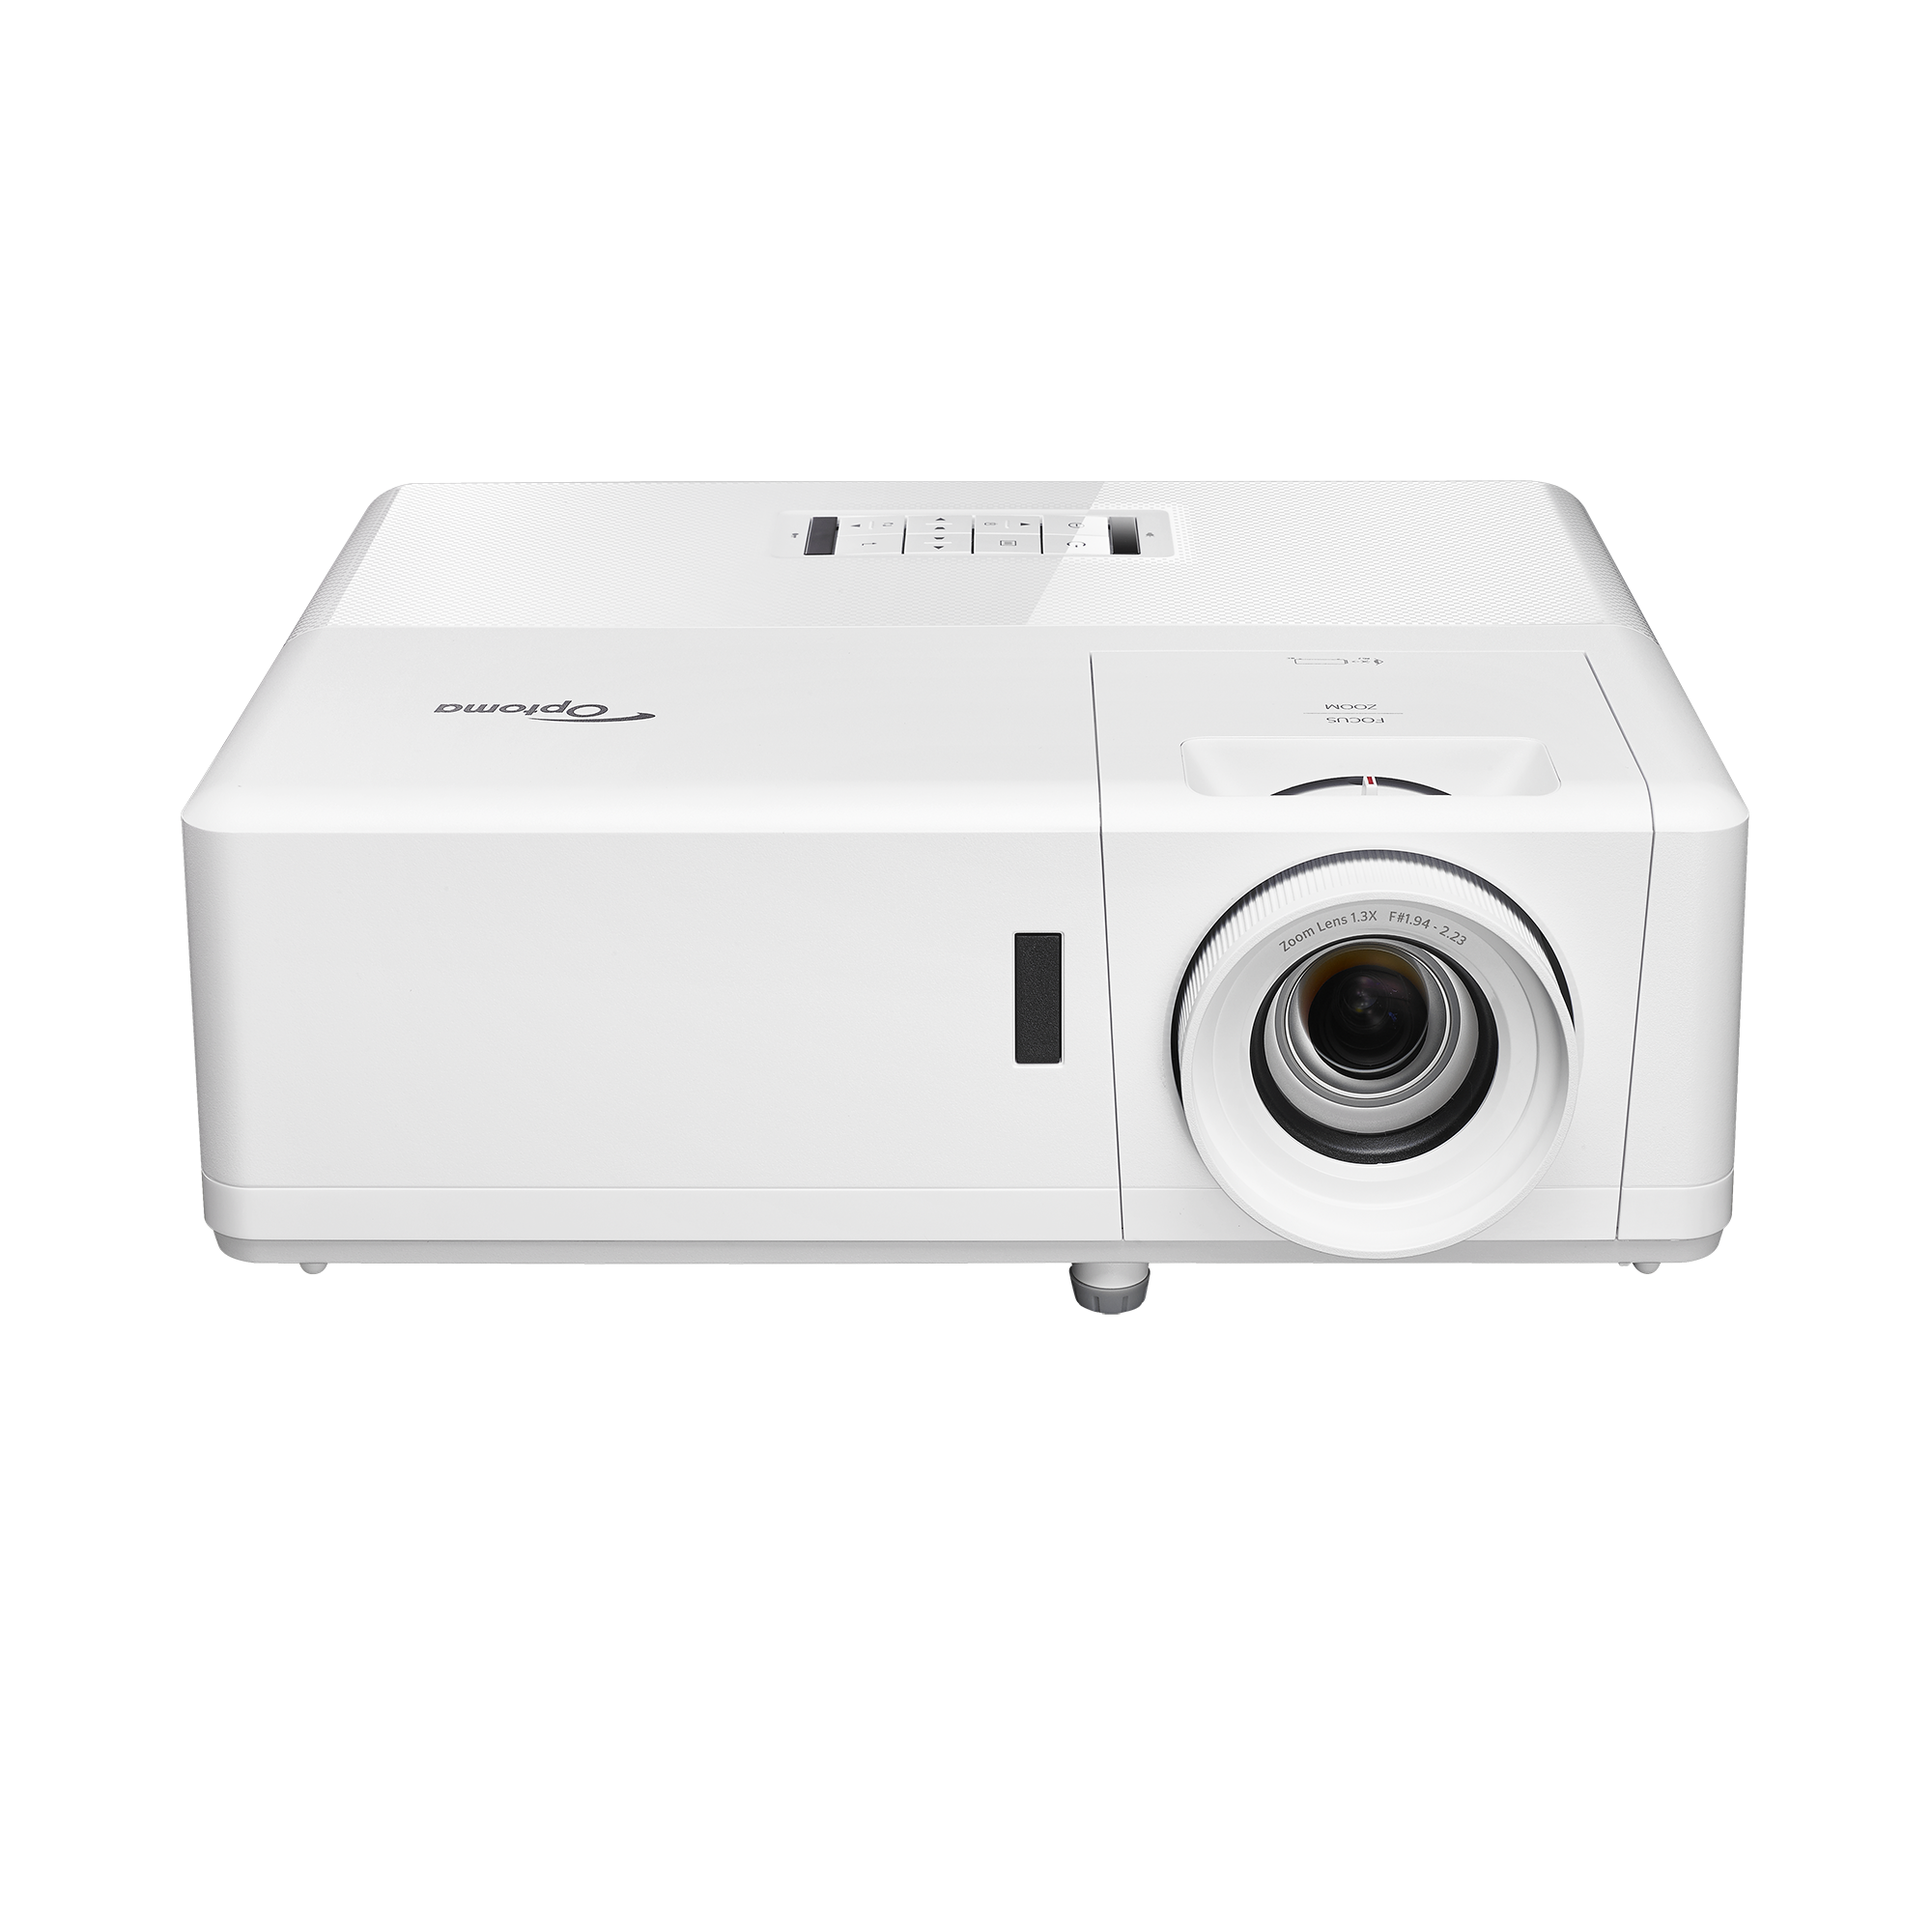 Optoma - ZH403 - 1080p Compact High Bright Laser Projector Australia